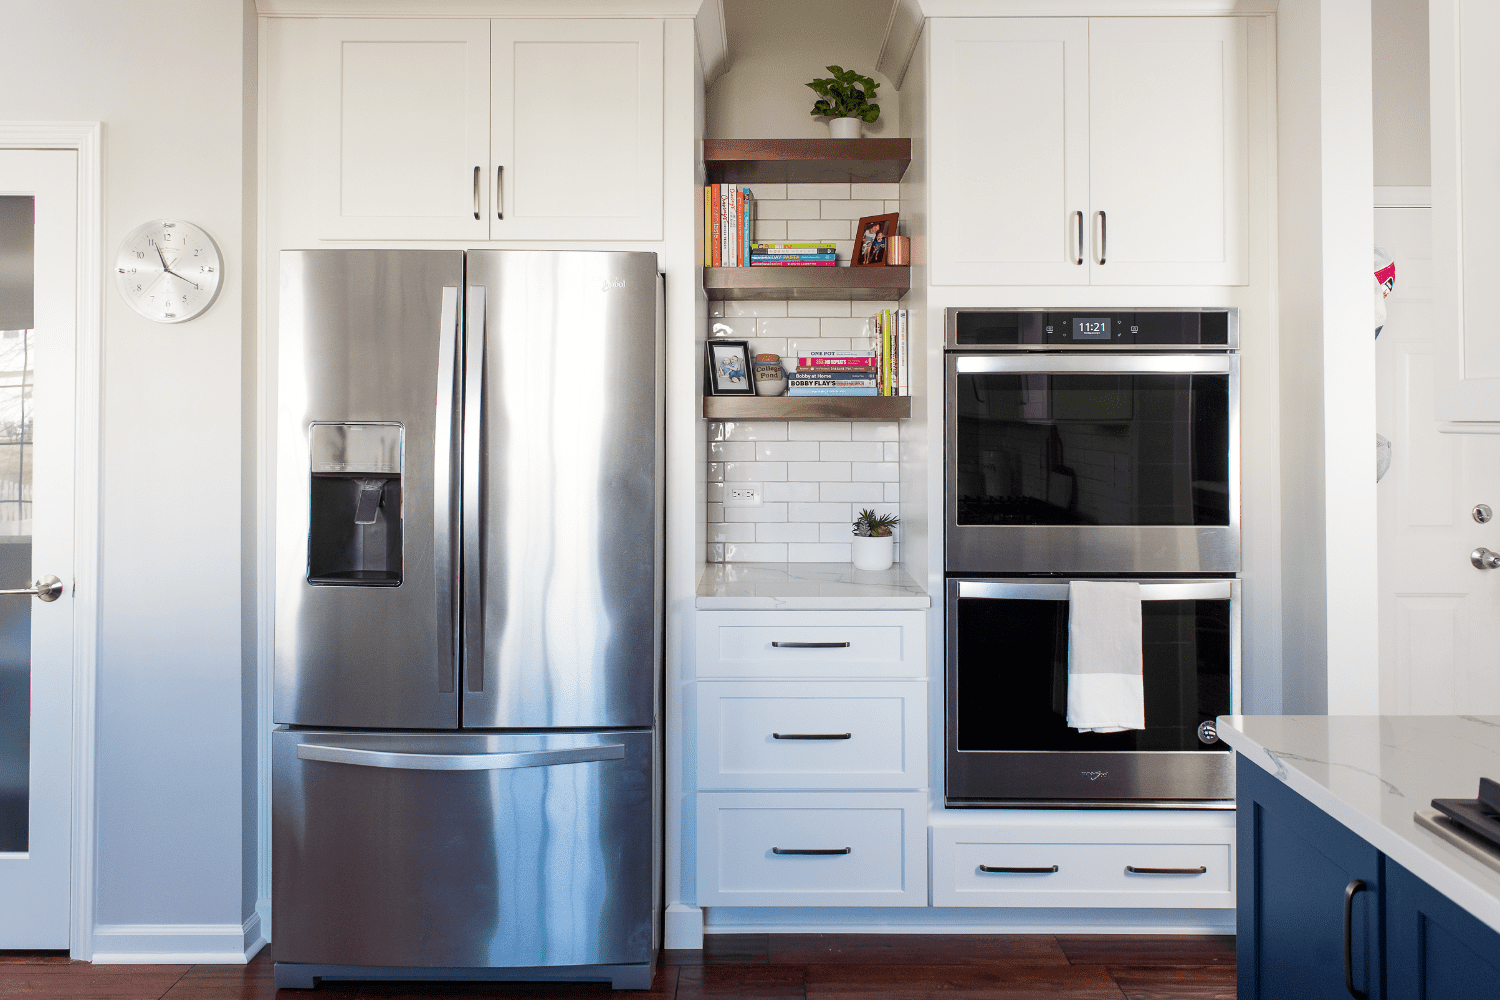 Nicholas Design Build | A stainless steel refrigerator in a kitchen.